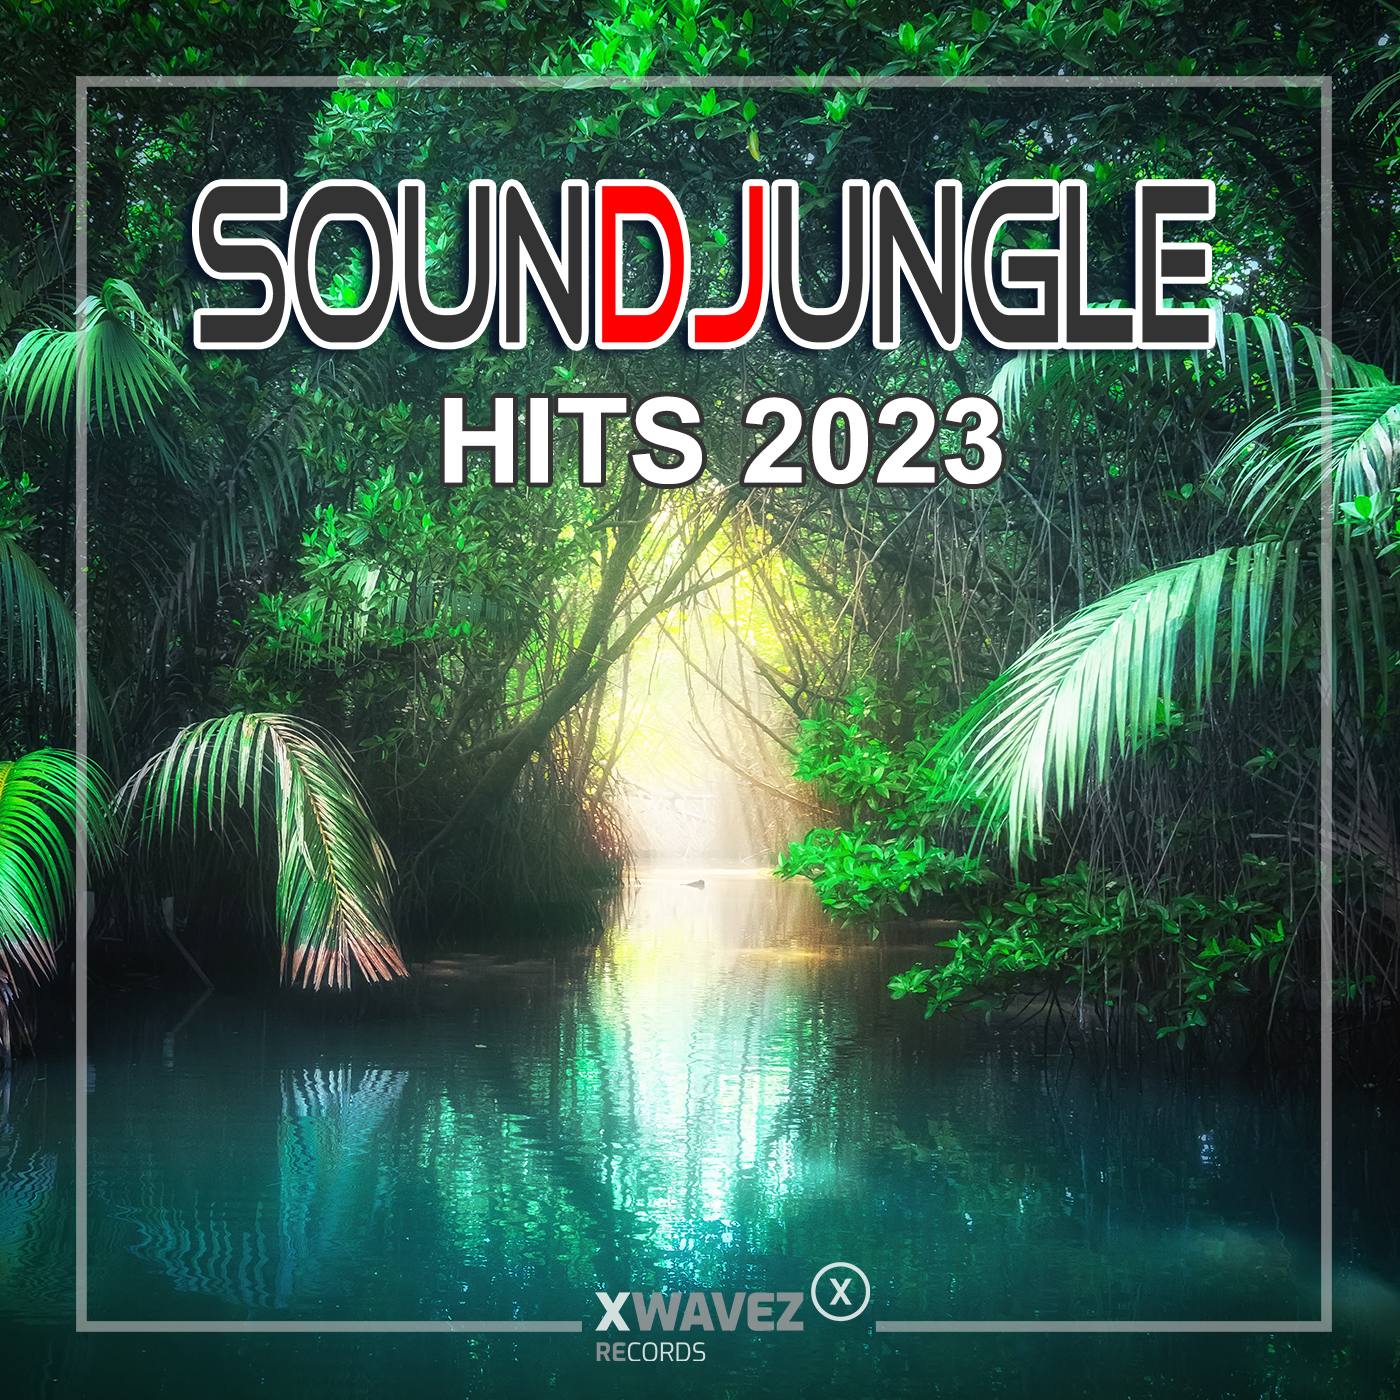 Soundjungle Hits 2023-1400